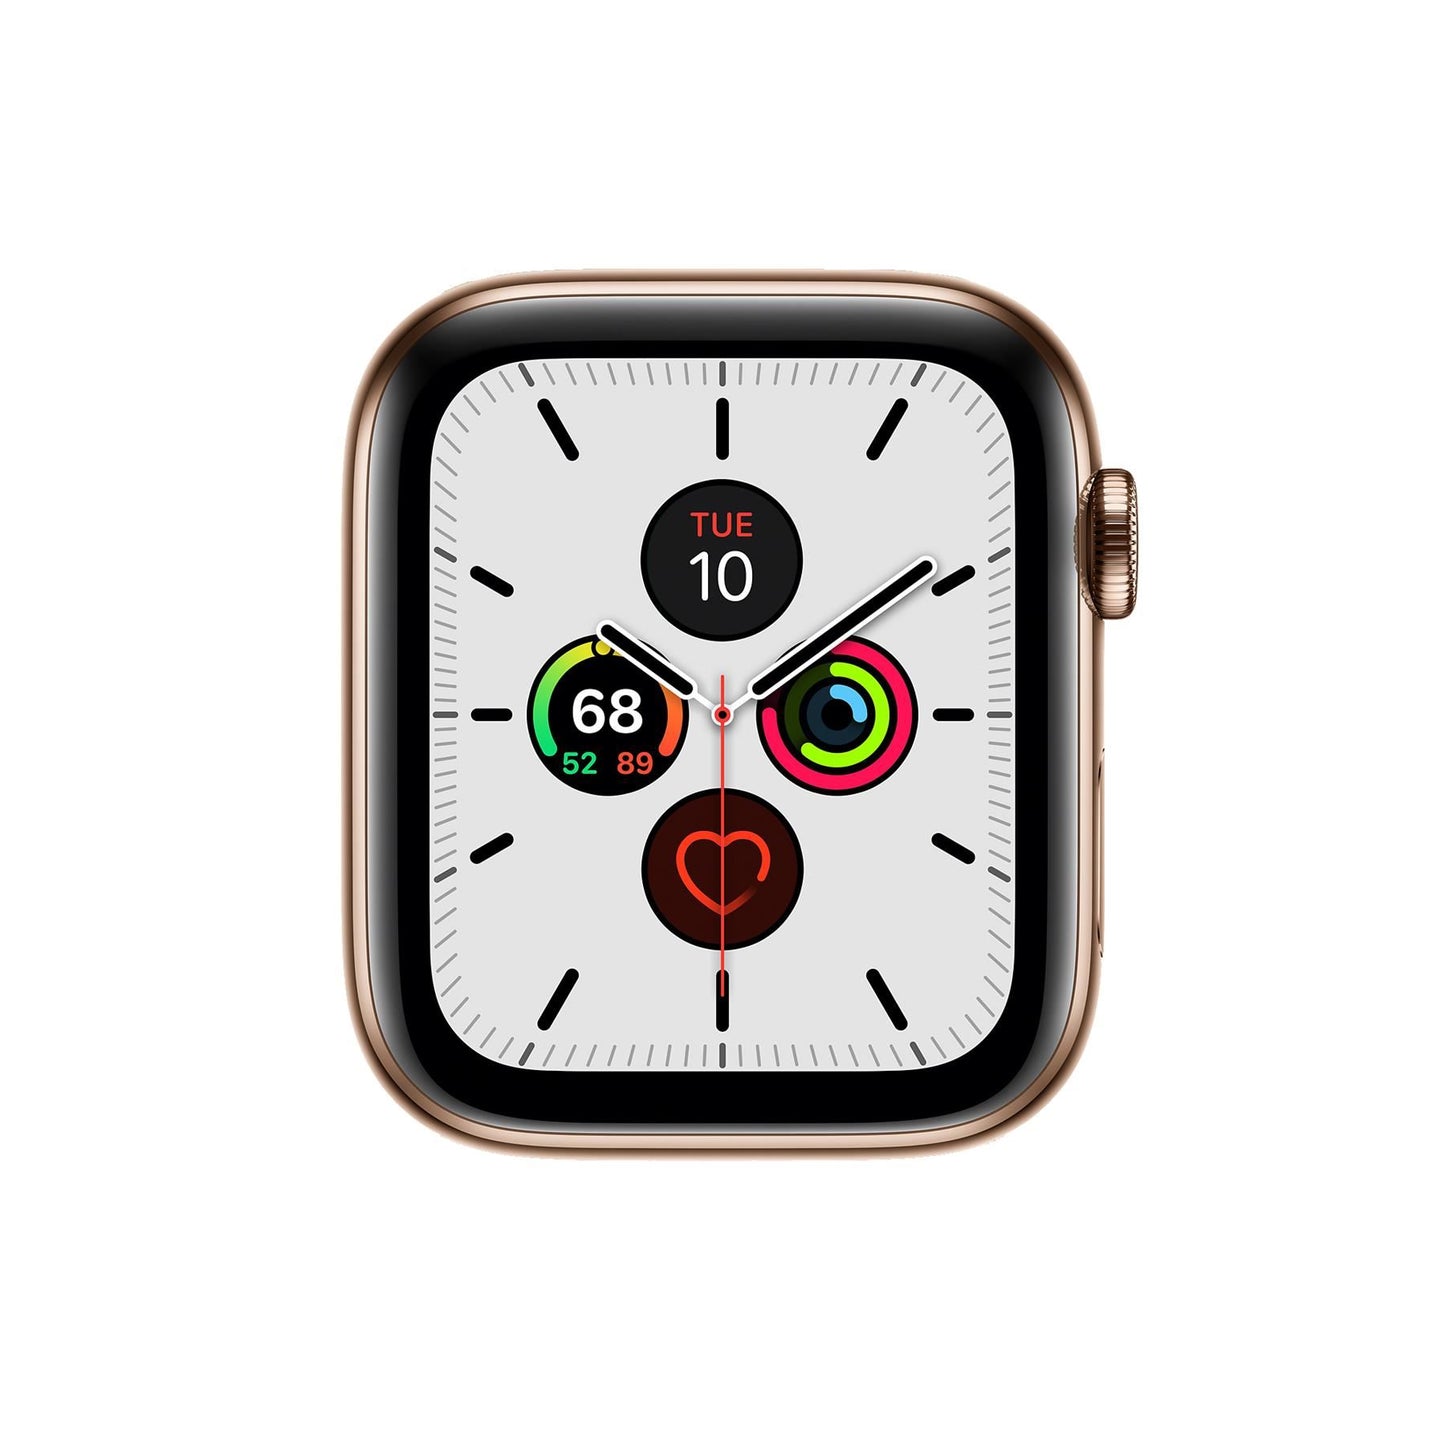 Apple Watch Series 5 44mm Wi-Fi + Cellular Smartwatch